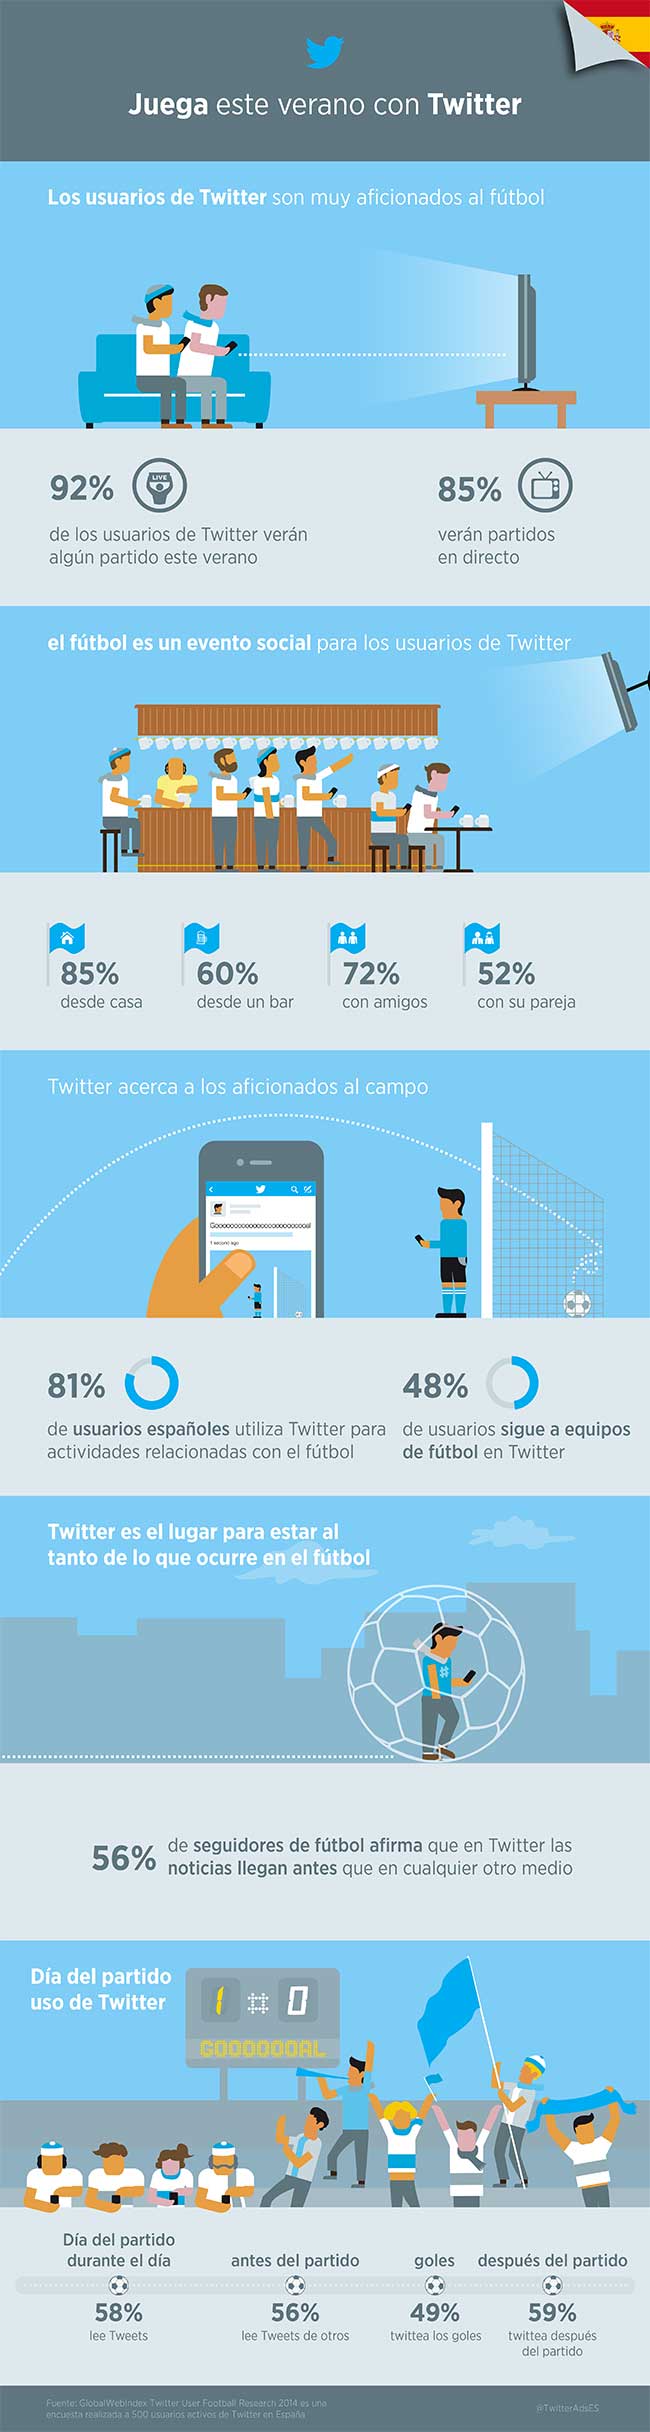 Infografía: Uso de Twitter durante un partido de fútbol